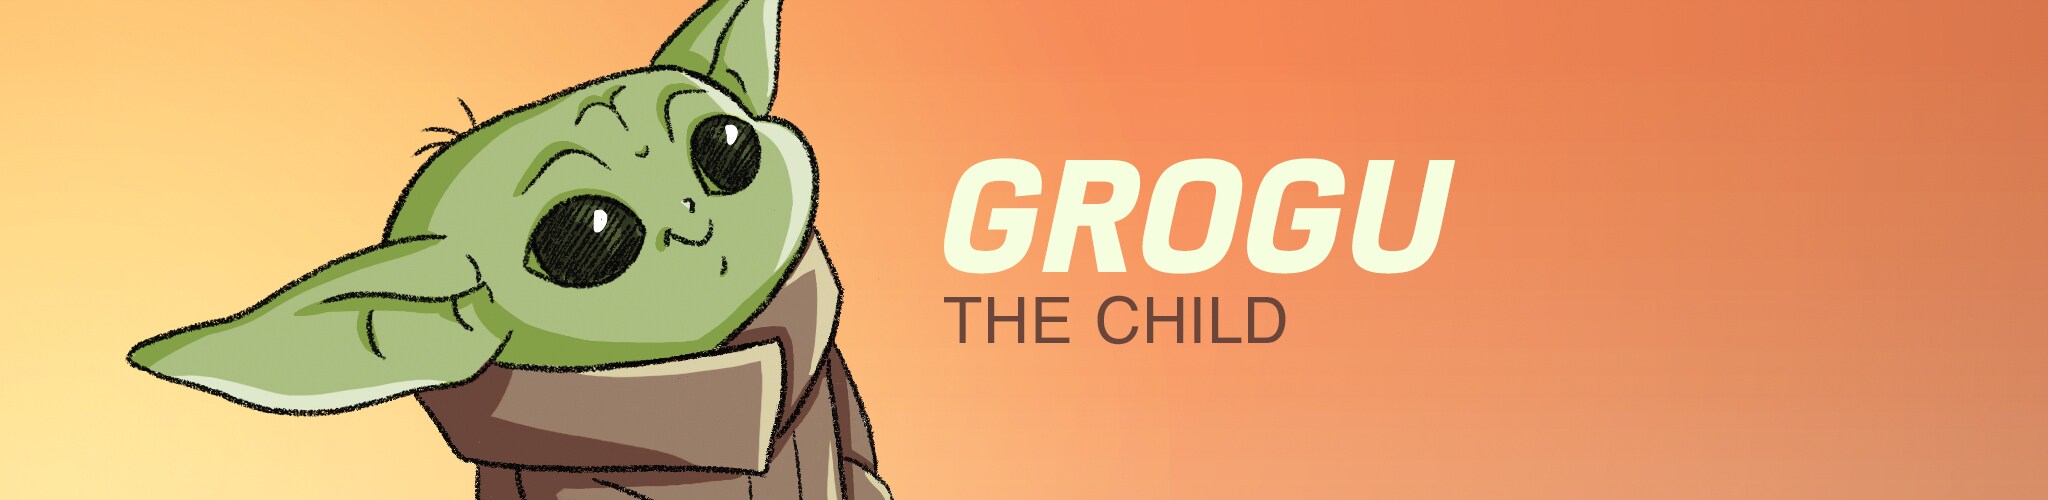 Grogu - The Child